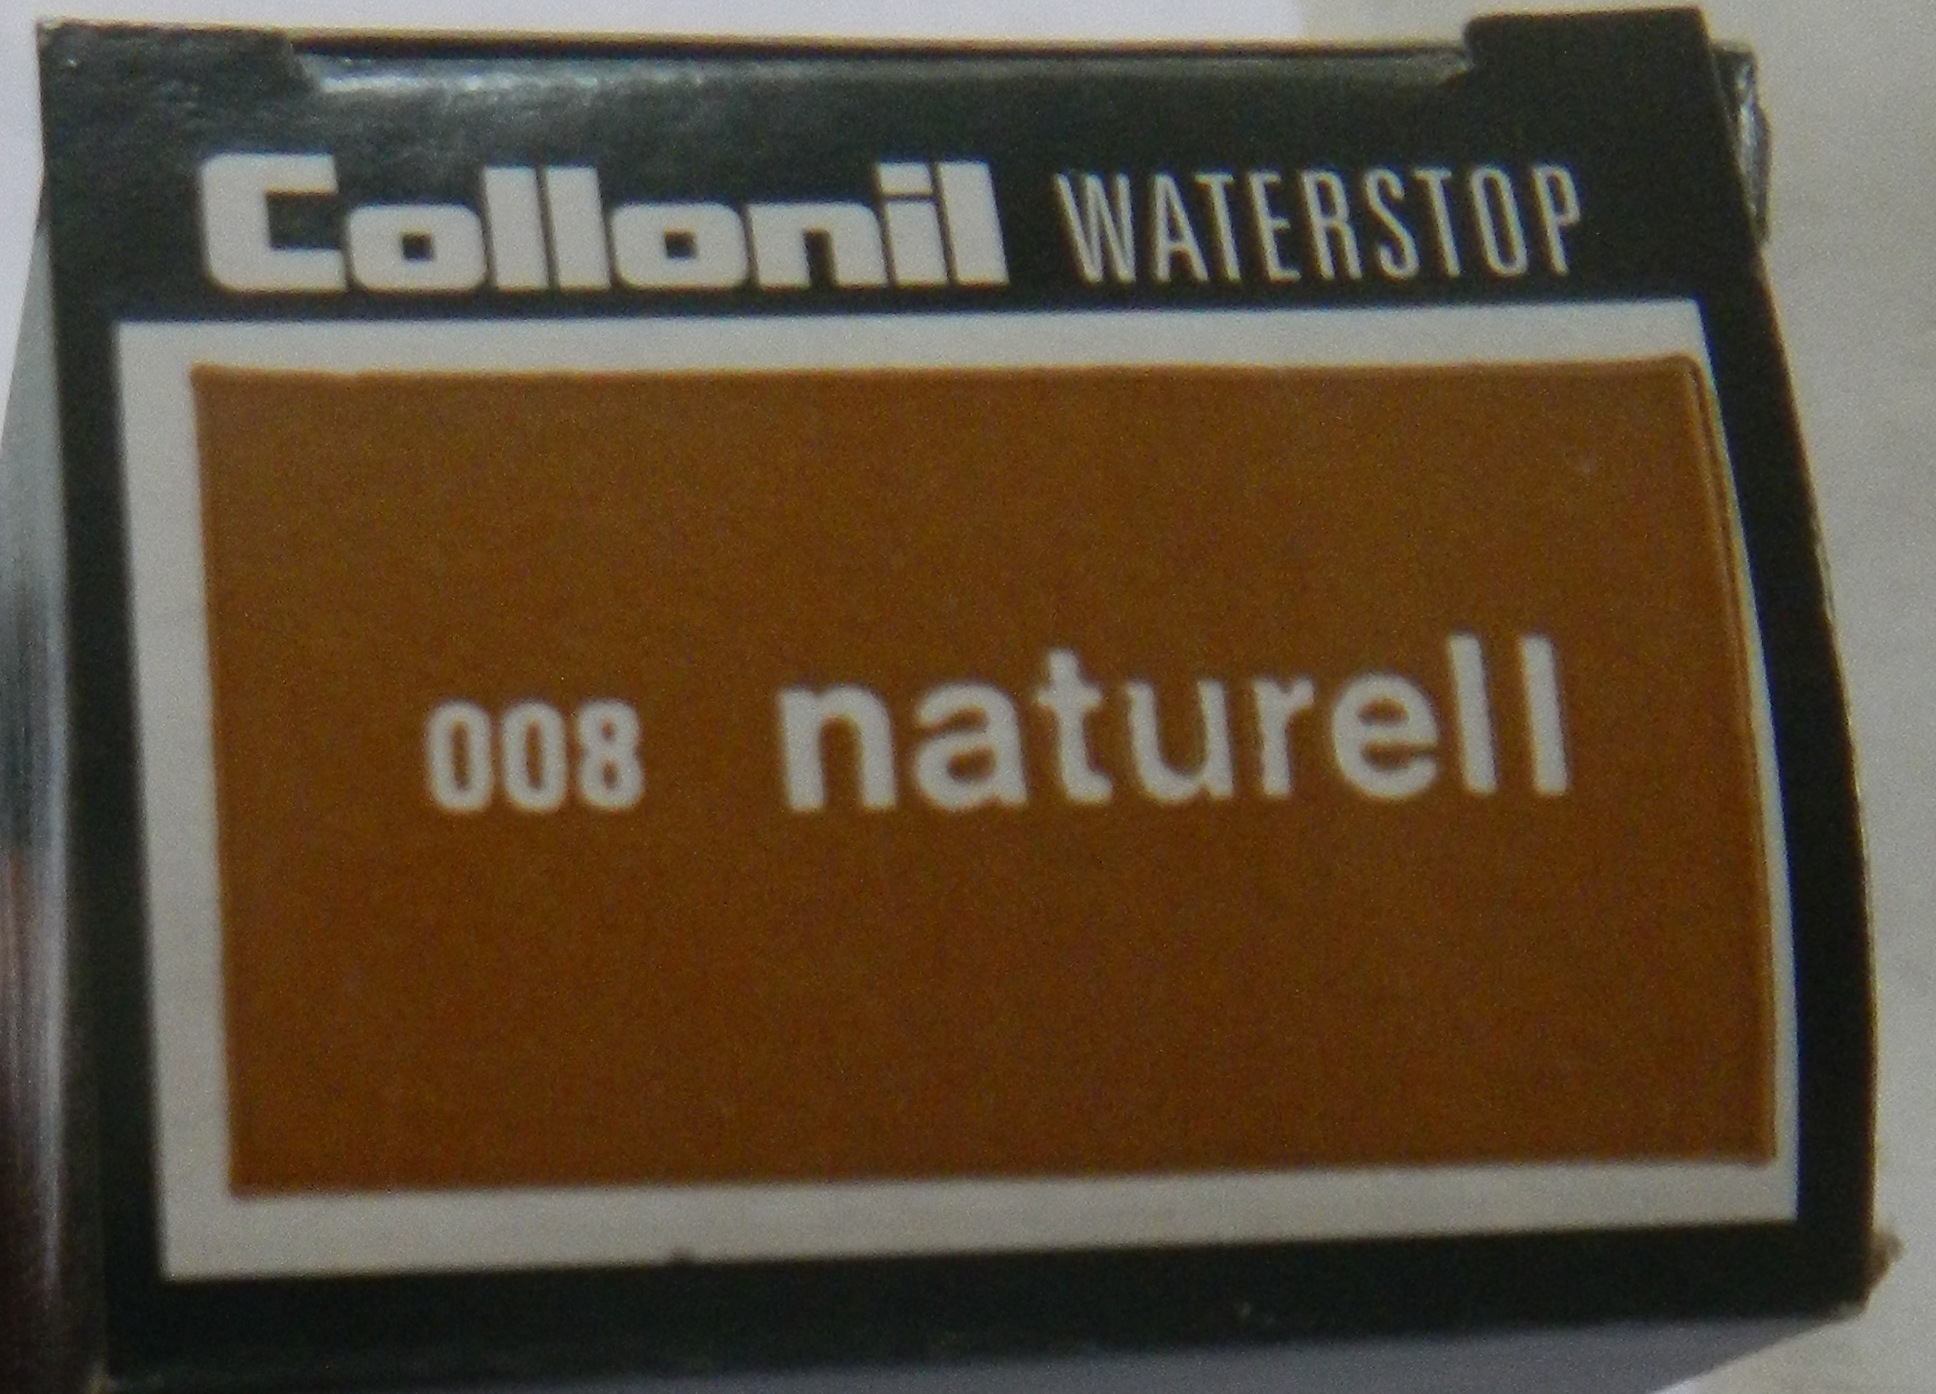 Collonil Waterstop Natural